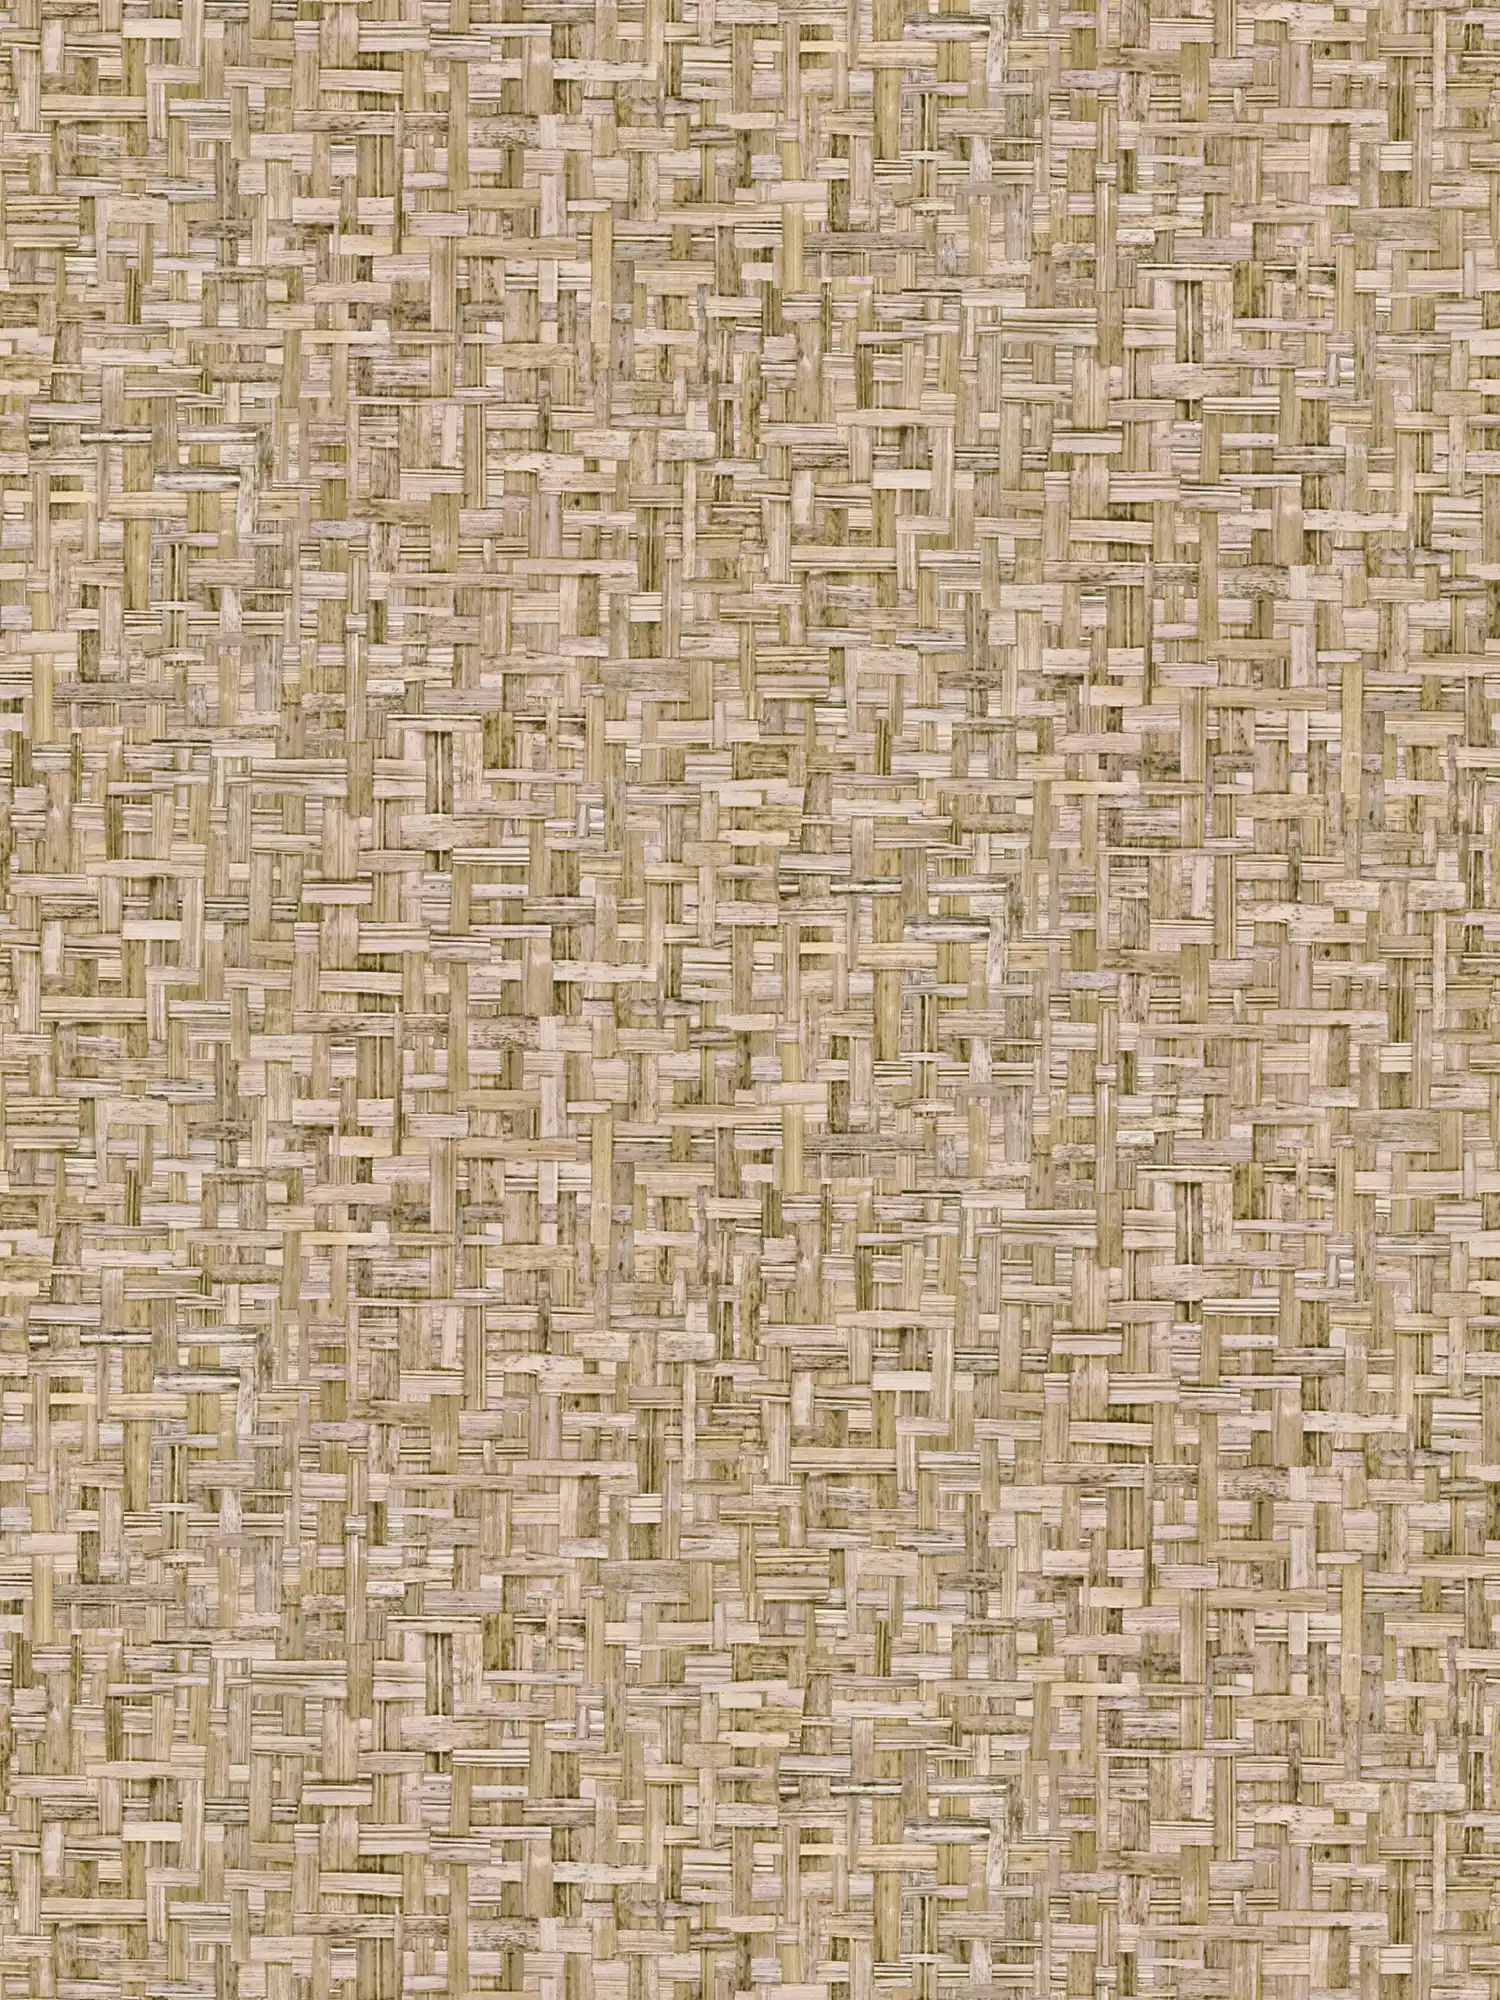 Wallpaper light brown wood look with fiber pattern - brown, beige
